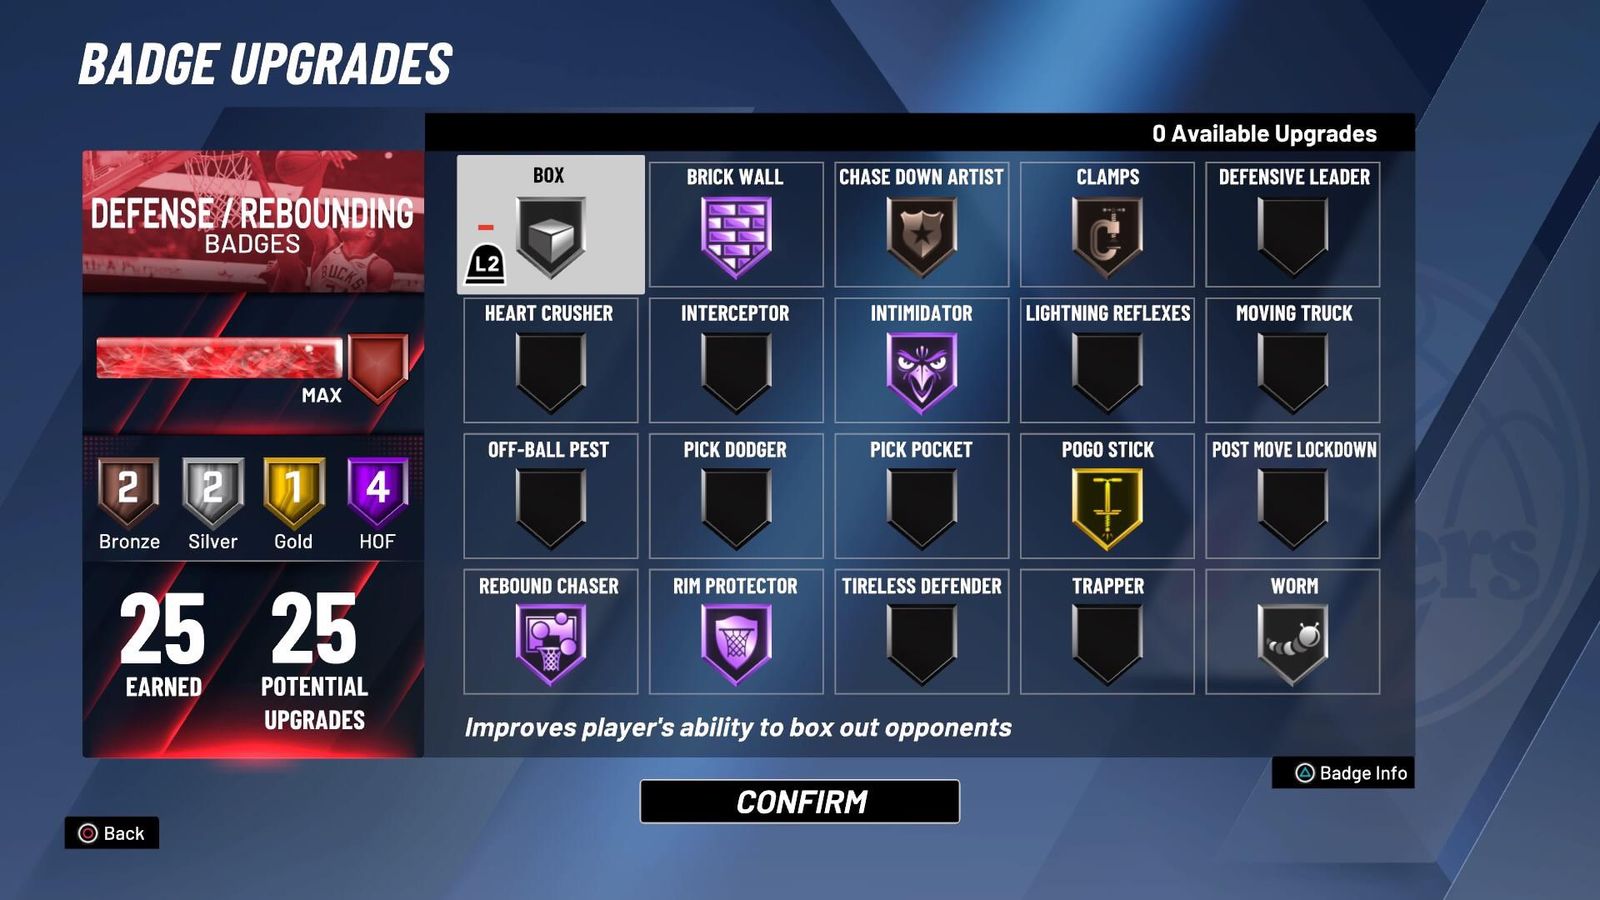 The Badge upgrade screen in NBA 2K22